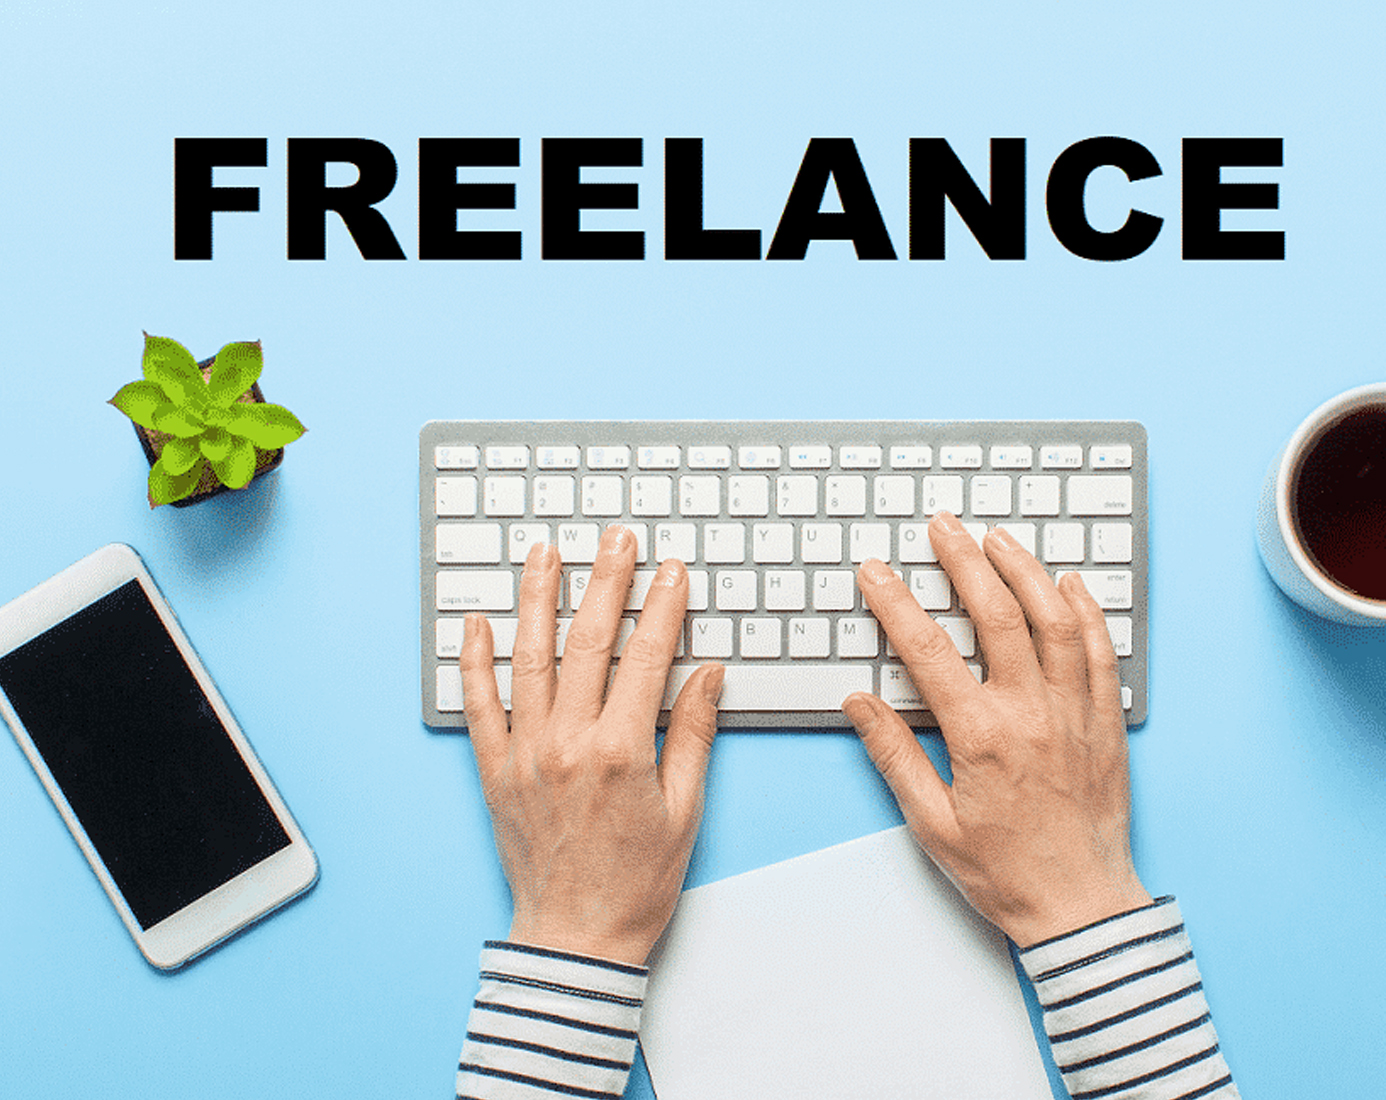  
cheapest freelance licence in dubai